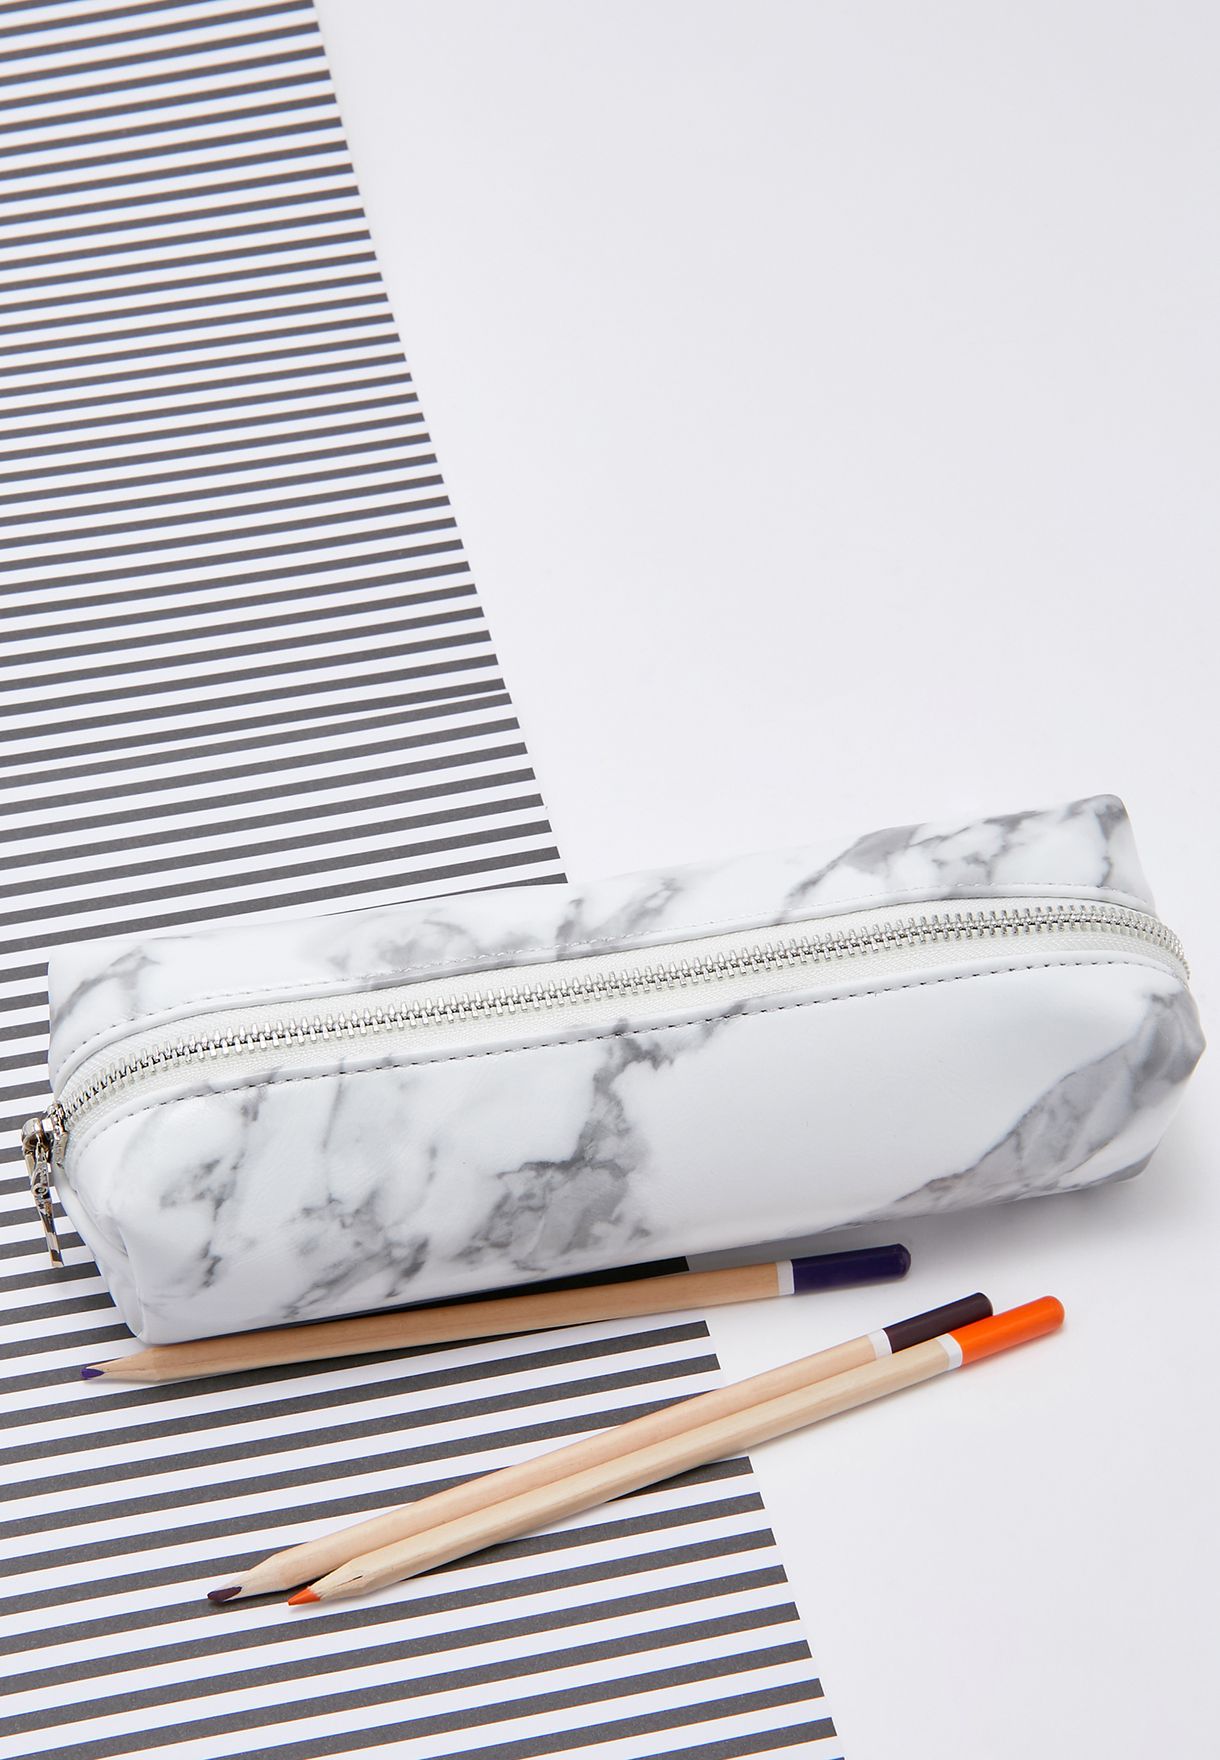 marble pencil case